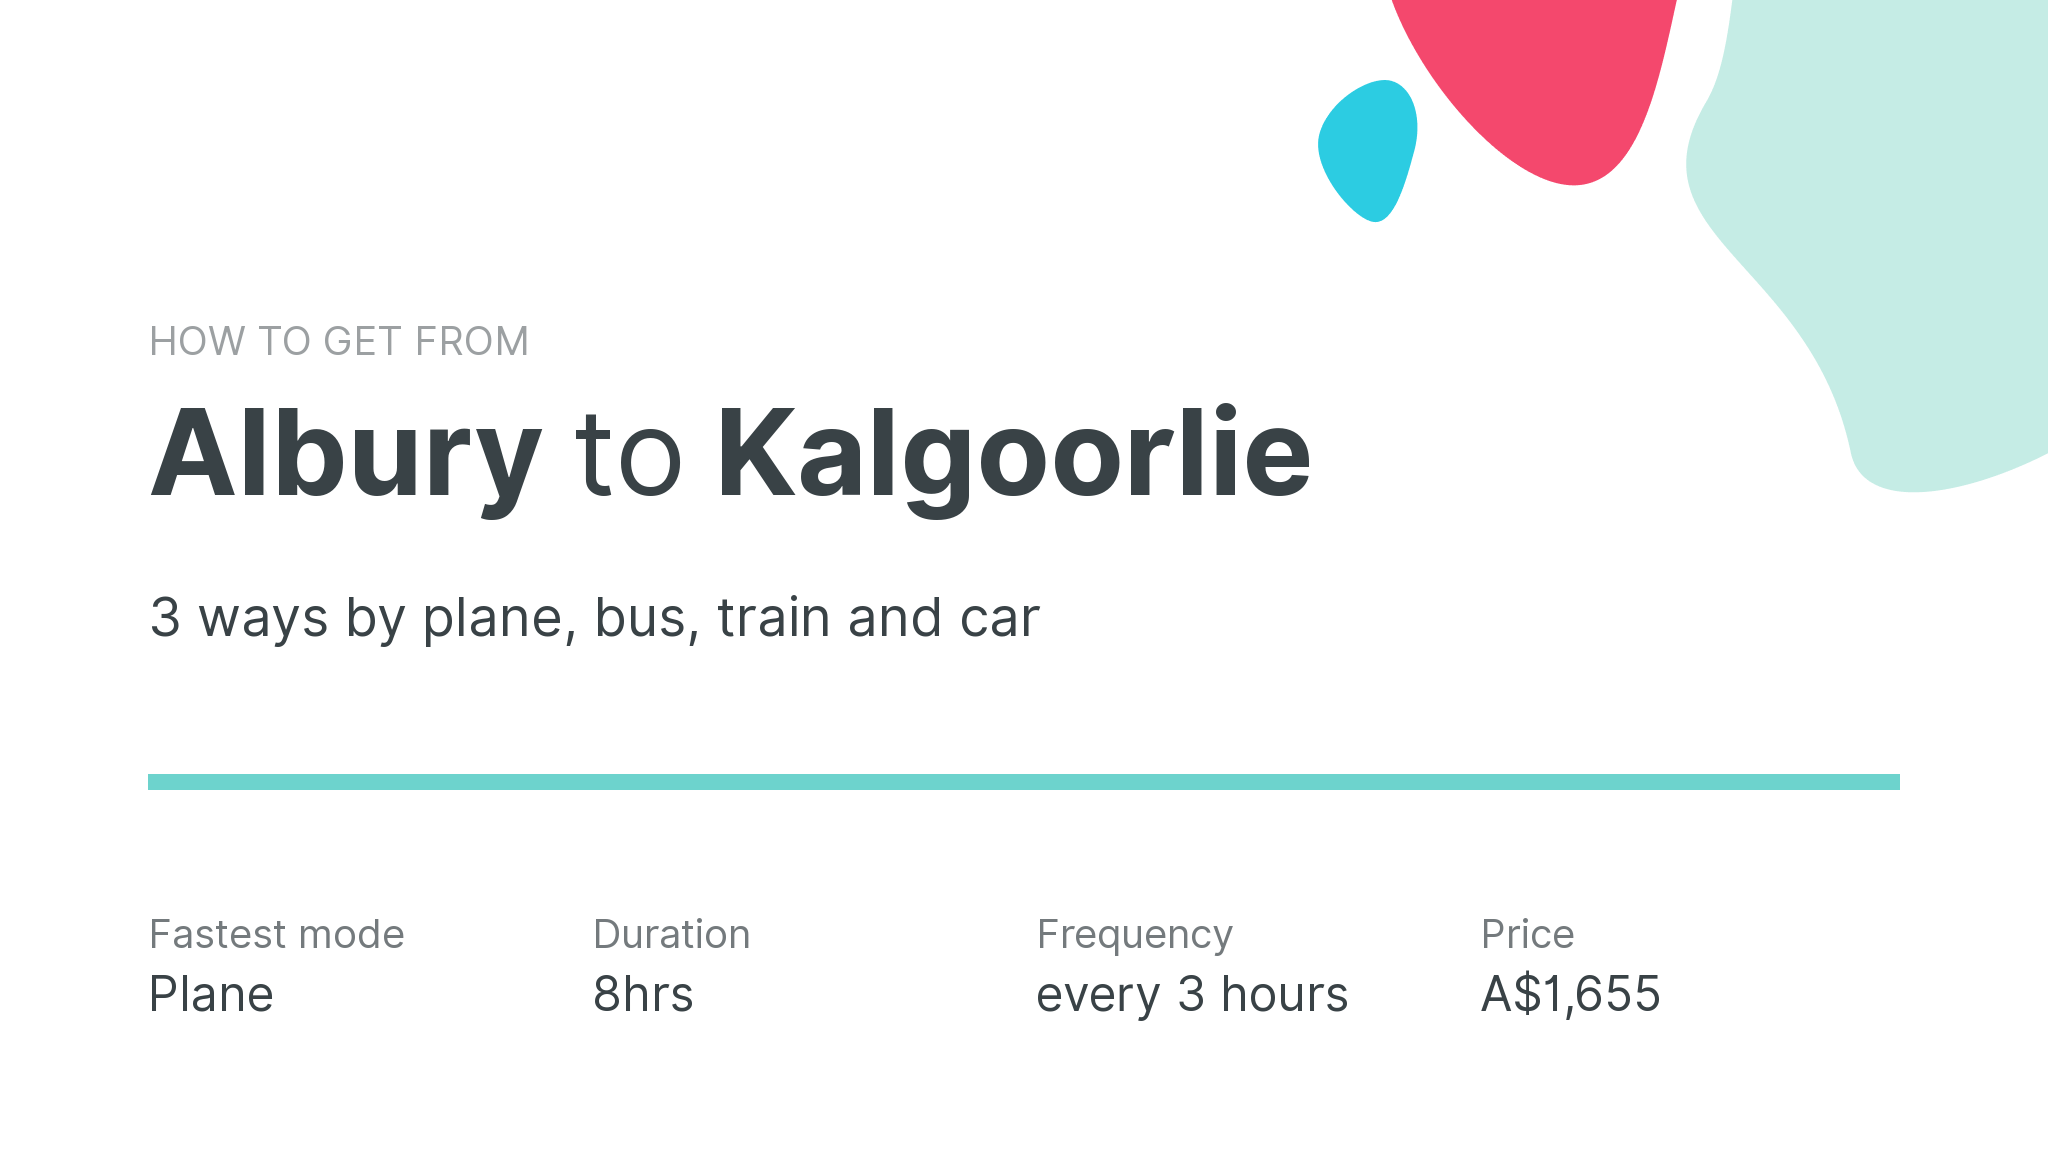 How do I get from Albury to Kalgoorlie